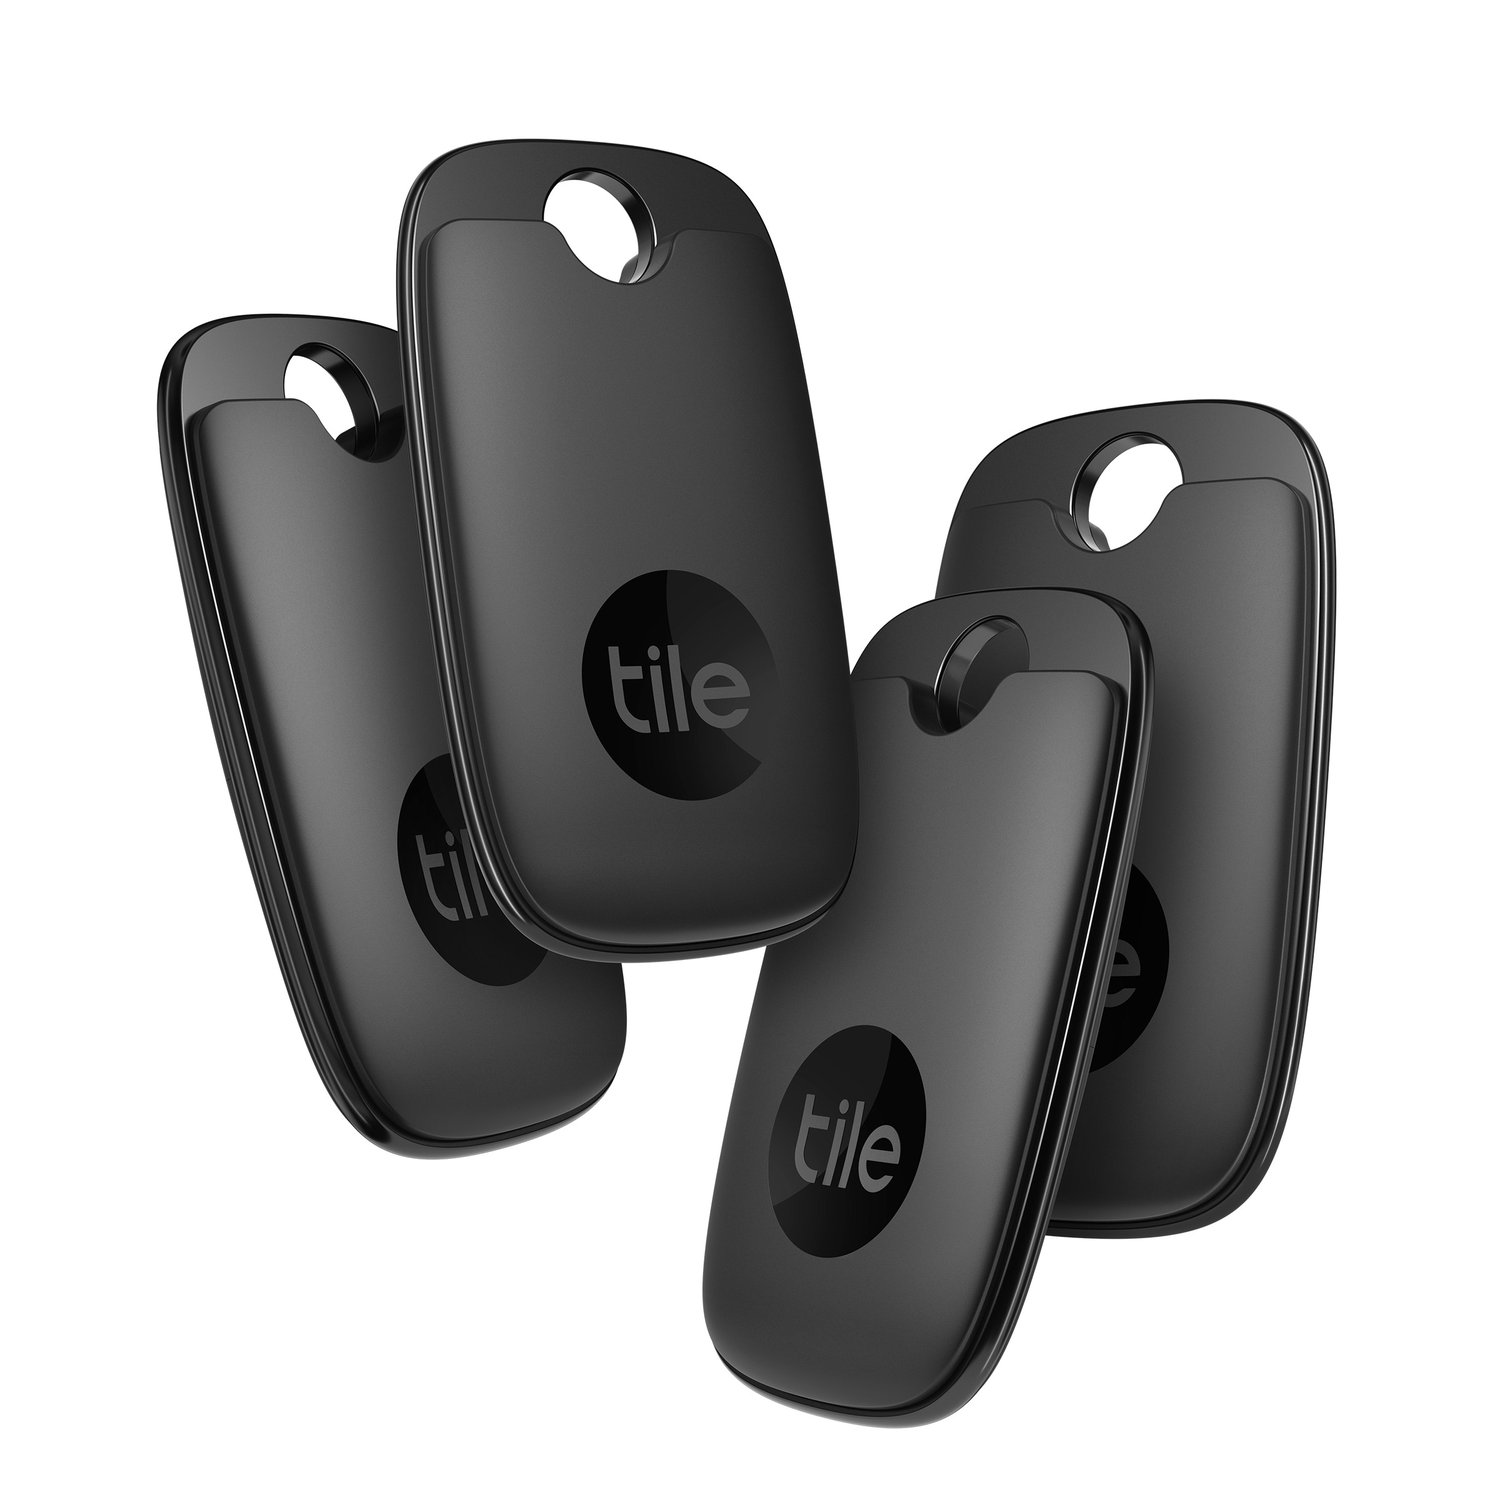 Tile Pro Bluetooth Tracker, 4-pack, Black